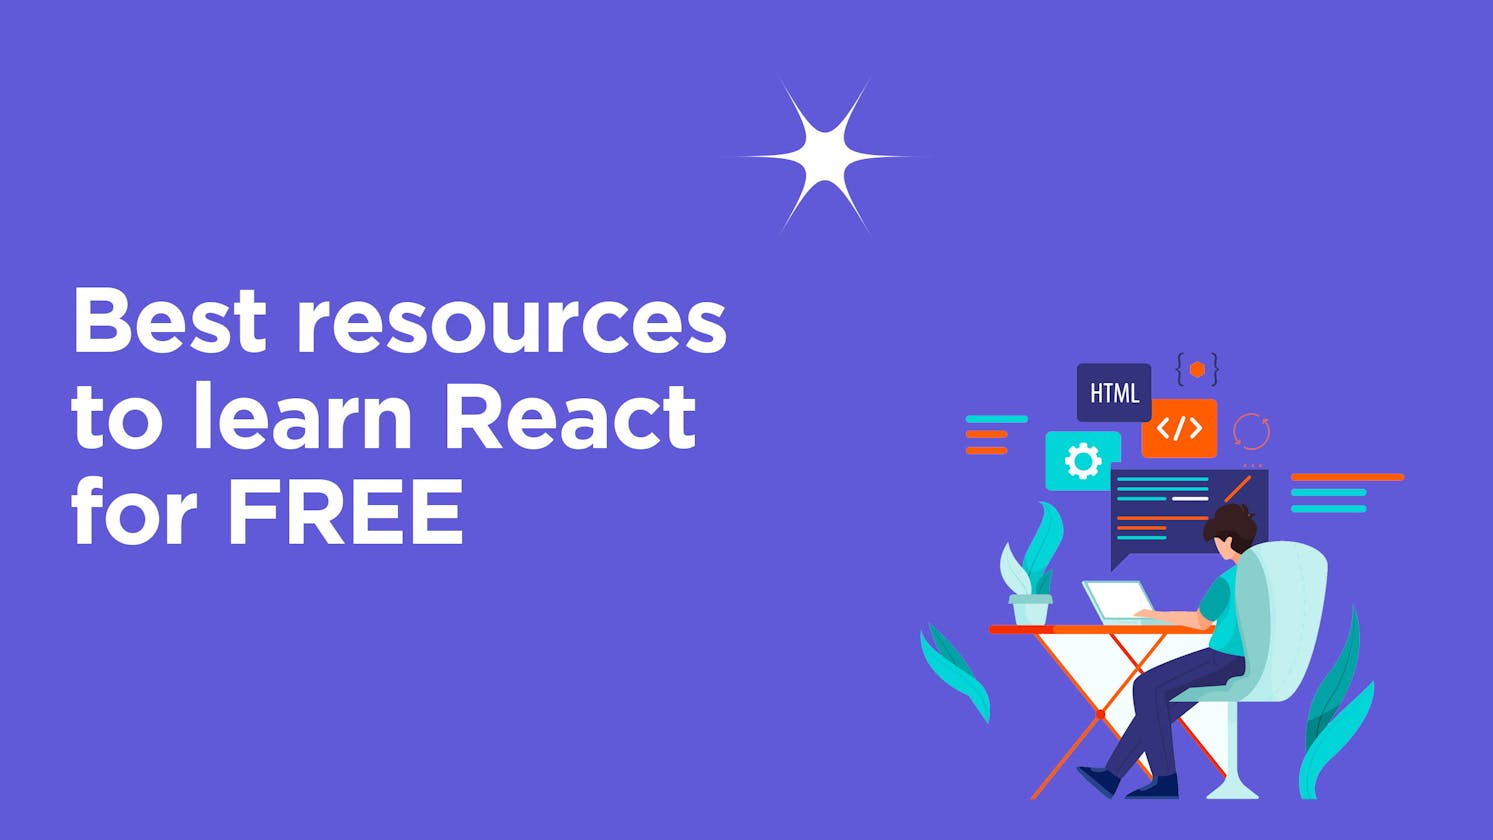 Master ReactJS for Free: 10 Amazing Resources to Kickstart Your Web Development Journey